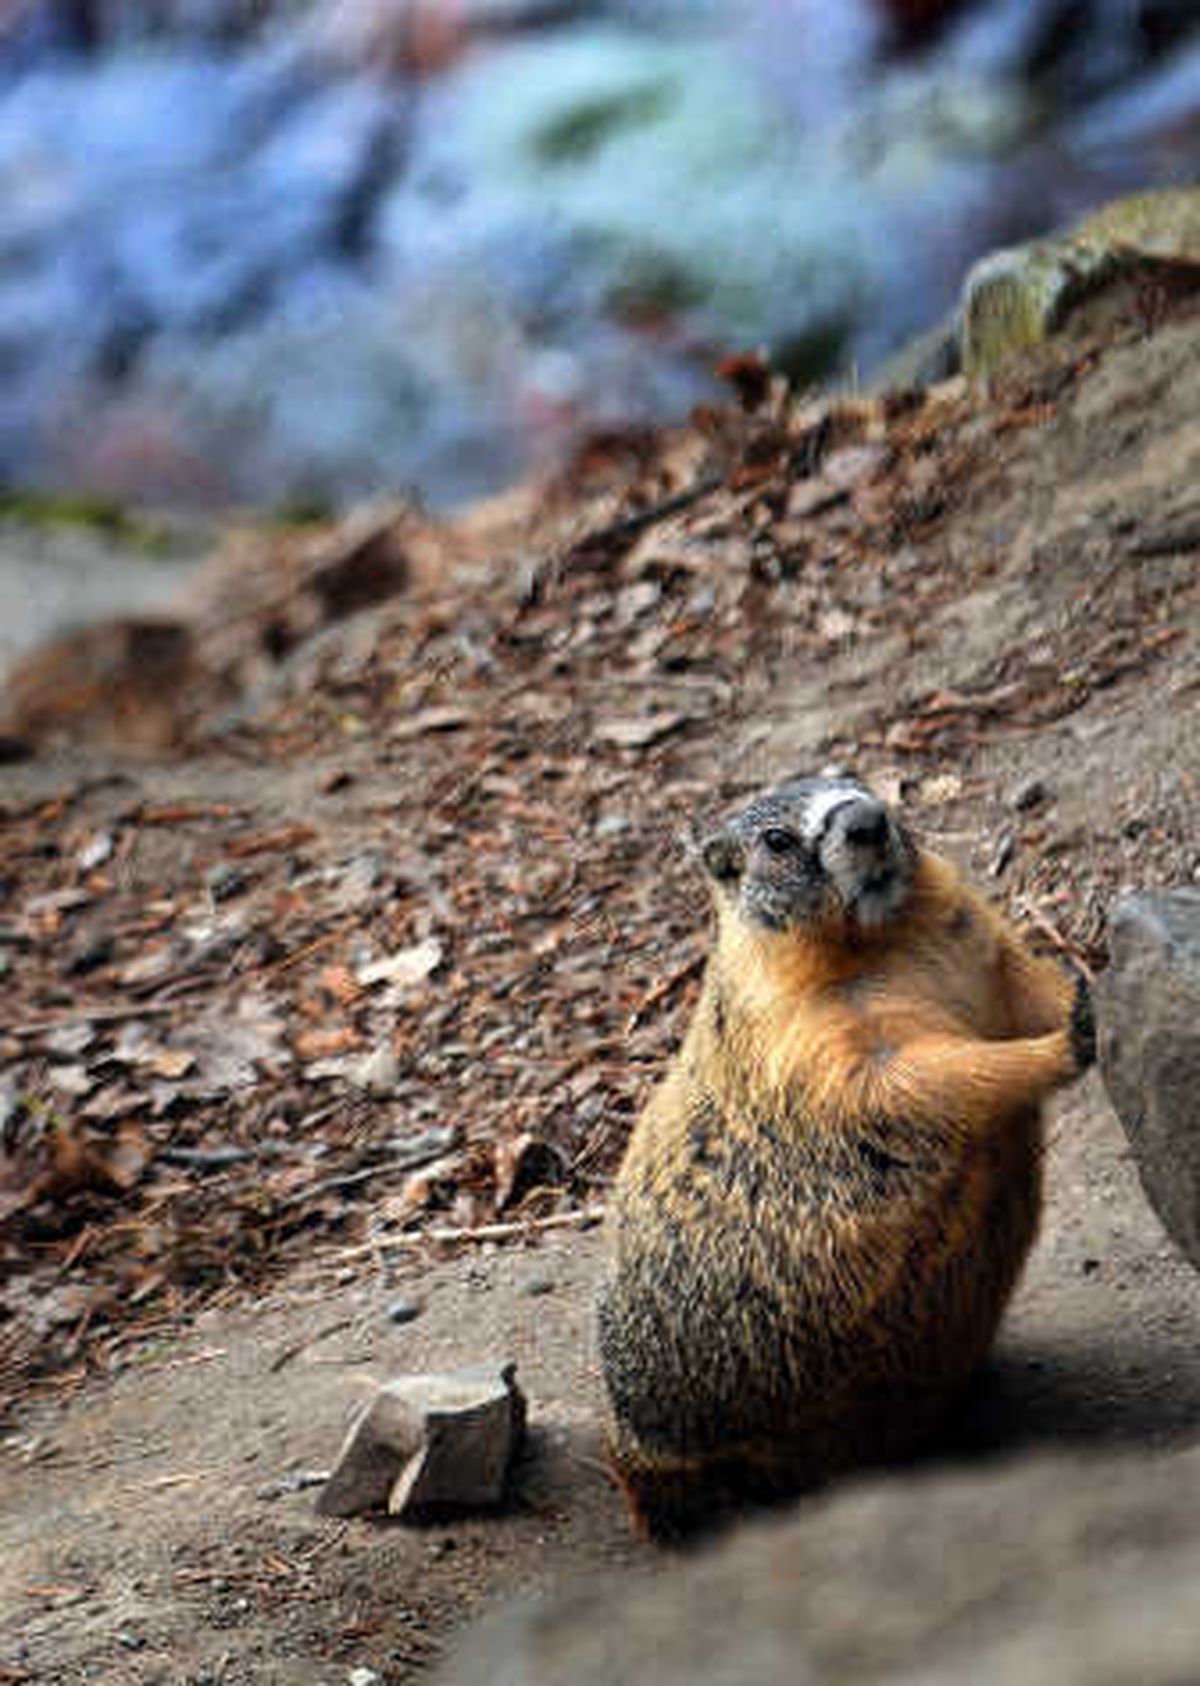 olympic marmot